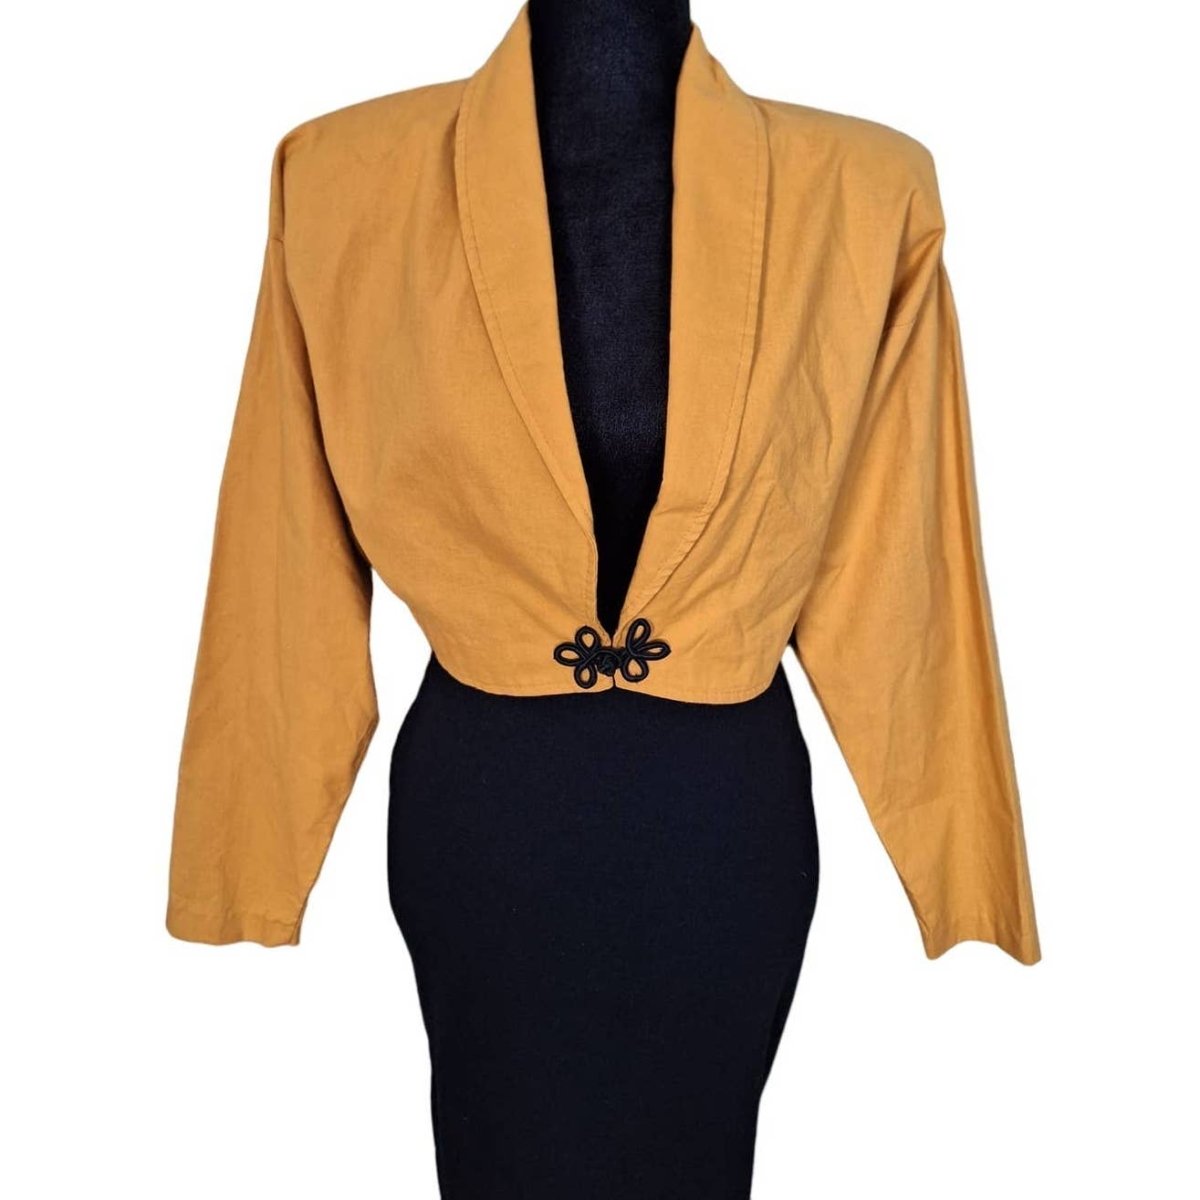 Vintage 80s Mustard Dolman Sleeve Cropped Jacket Size Medium - themallvintage The Mall Vintage